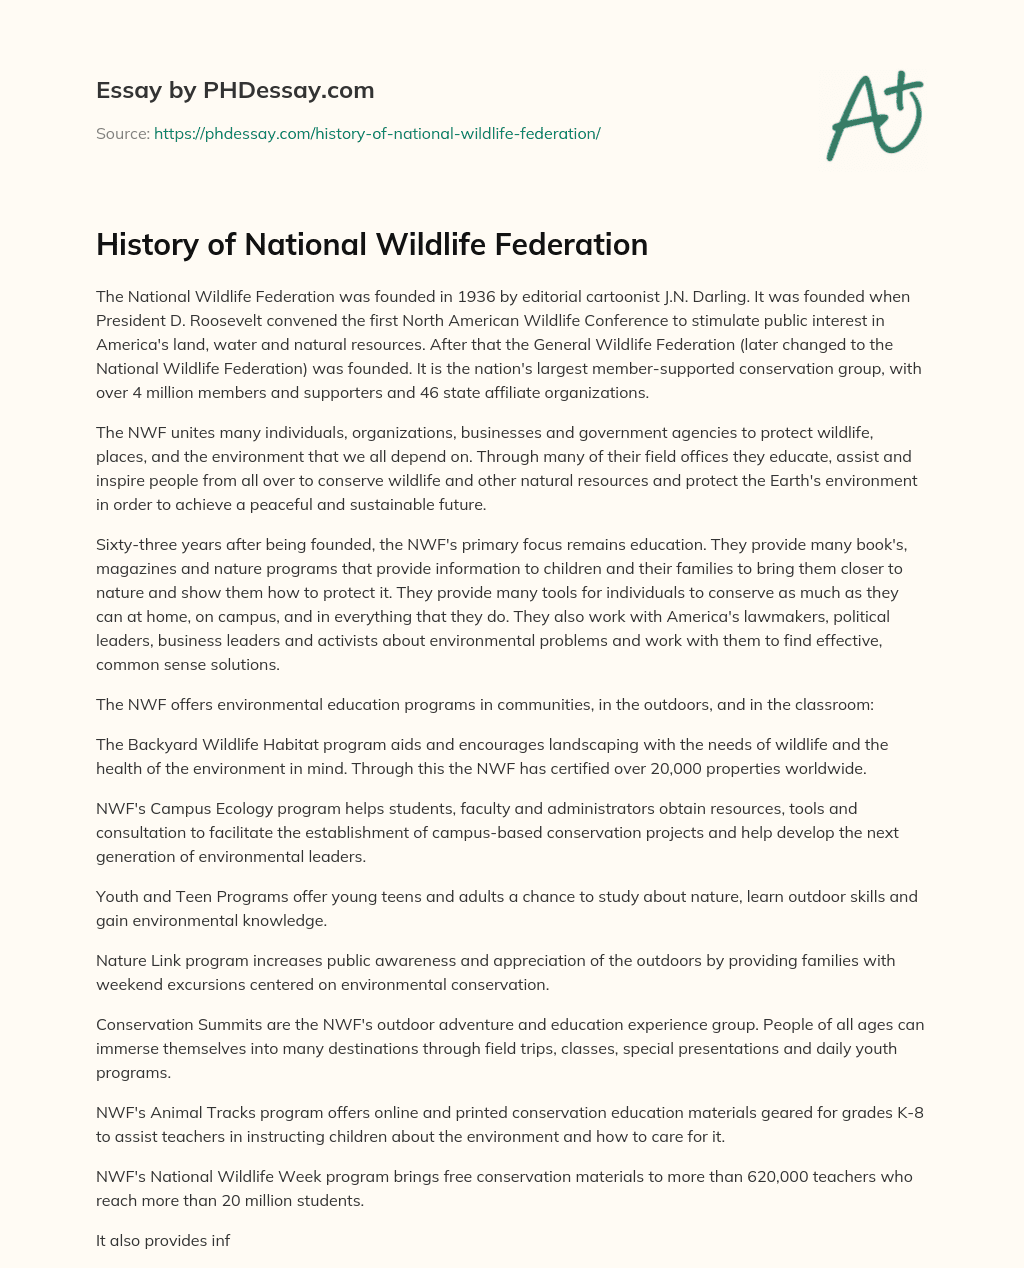 History of National Wildlife Federation essay